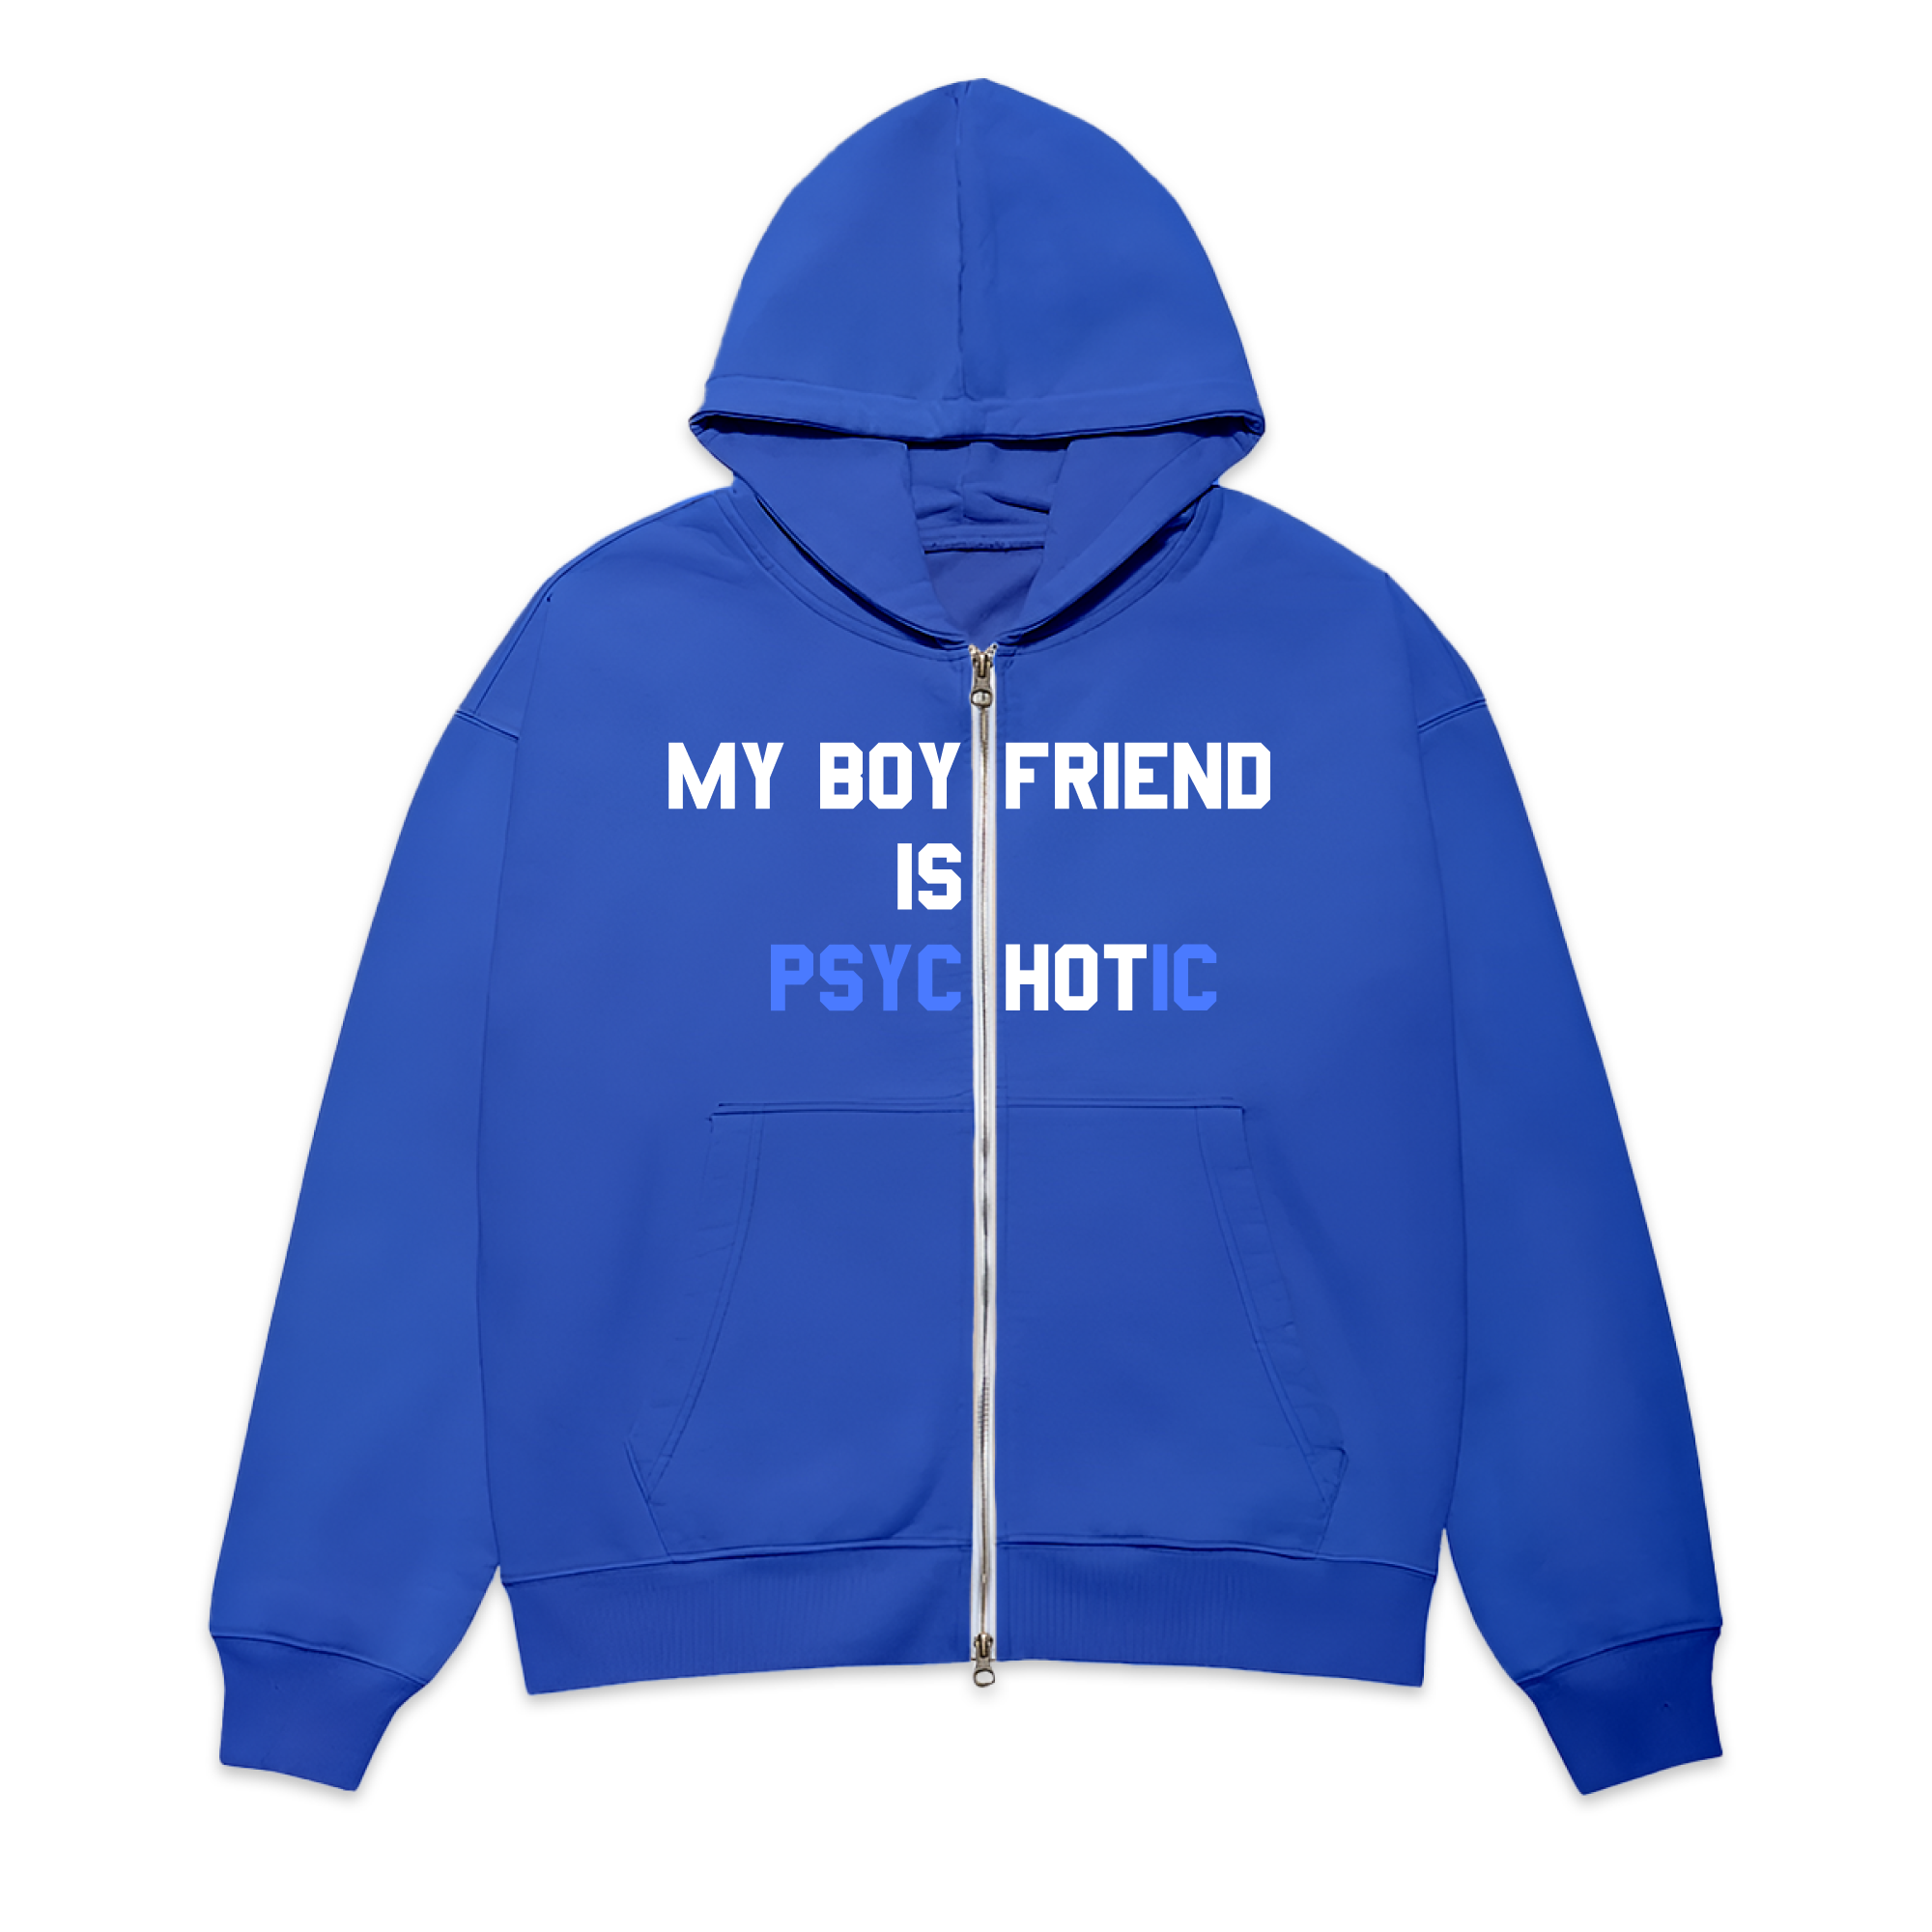 My Boyfriend Is Psychotic Zip Up Hoodie Sweatshirt